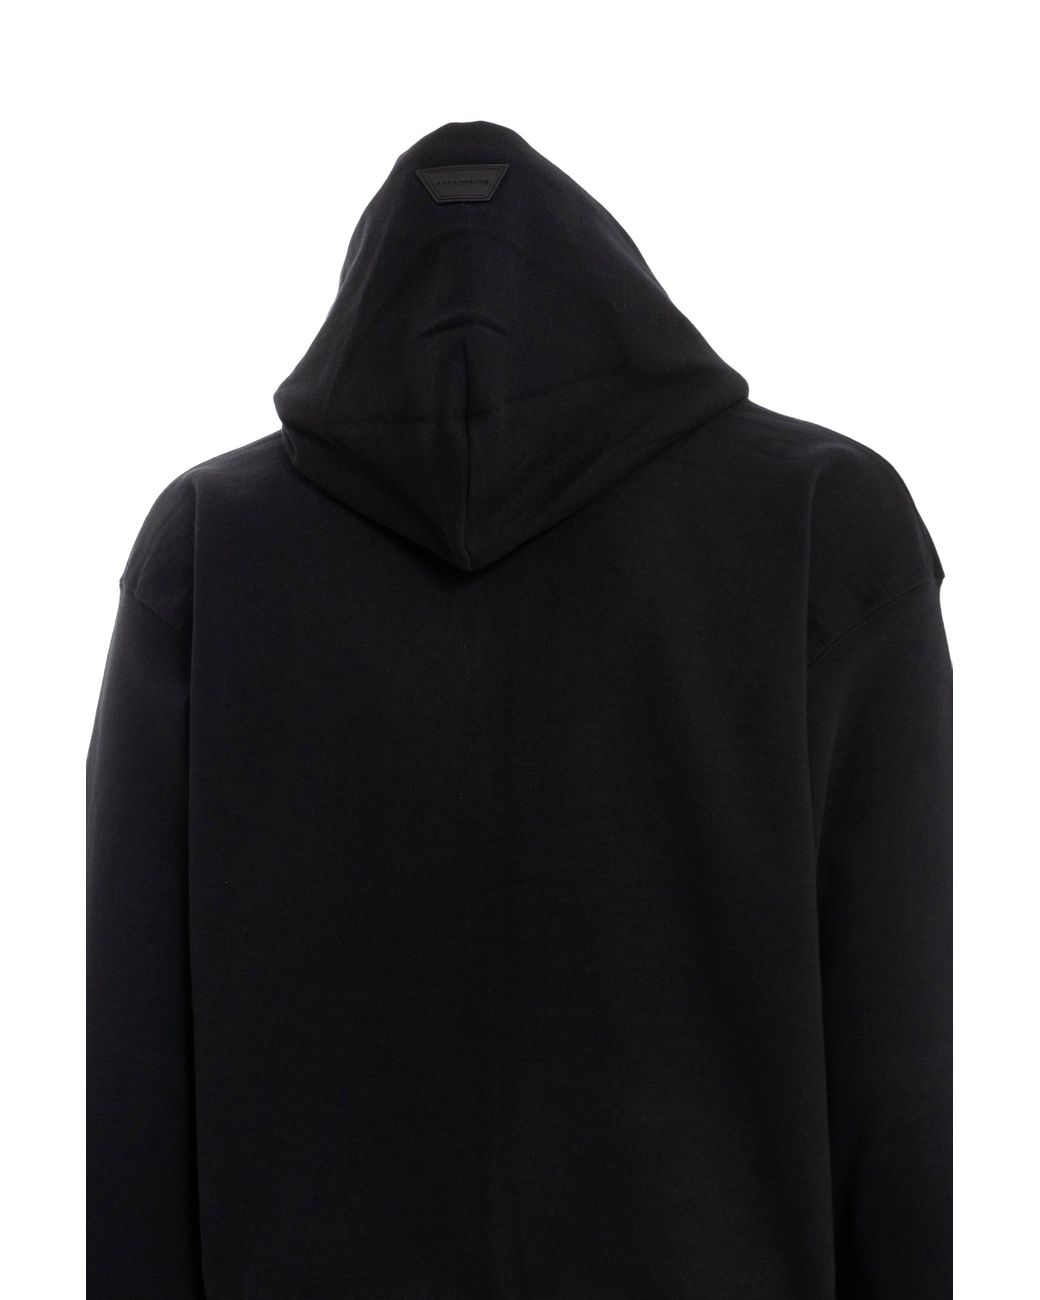 FORSOMEONE Solid Zip Hoodie in Black for Men | Lyst